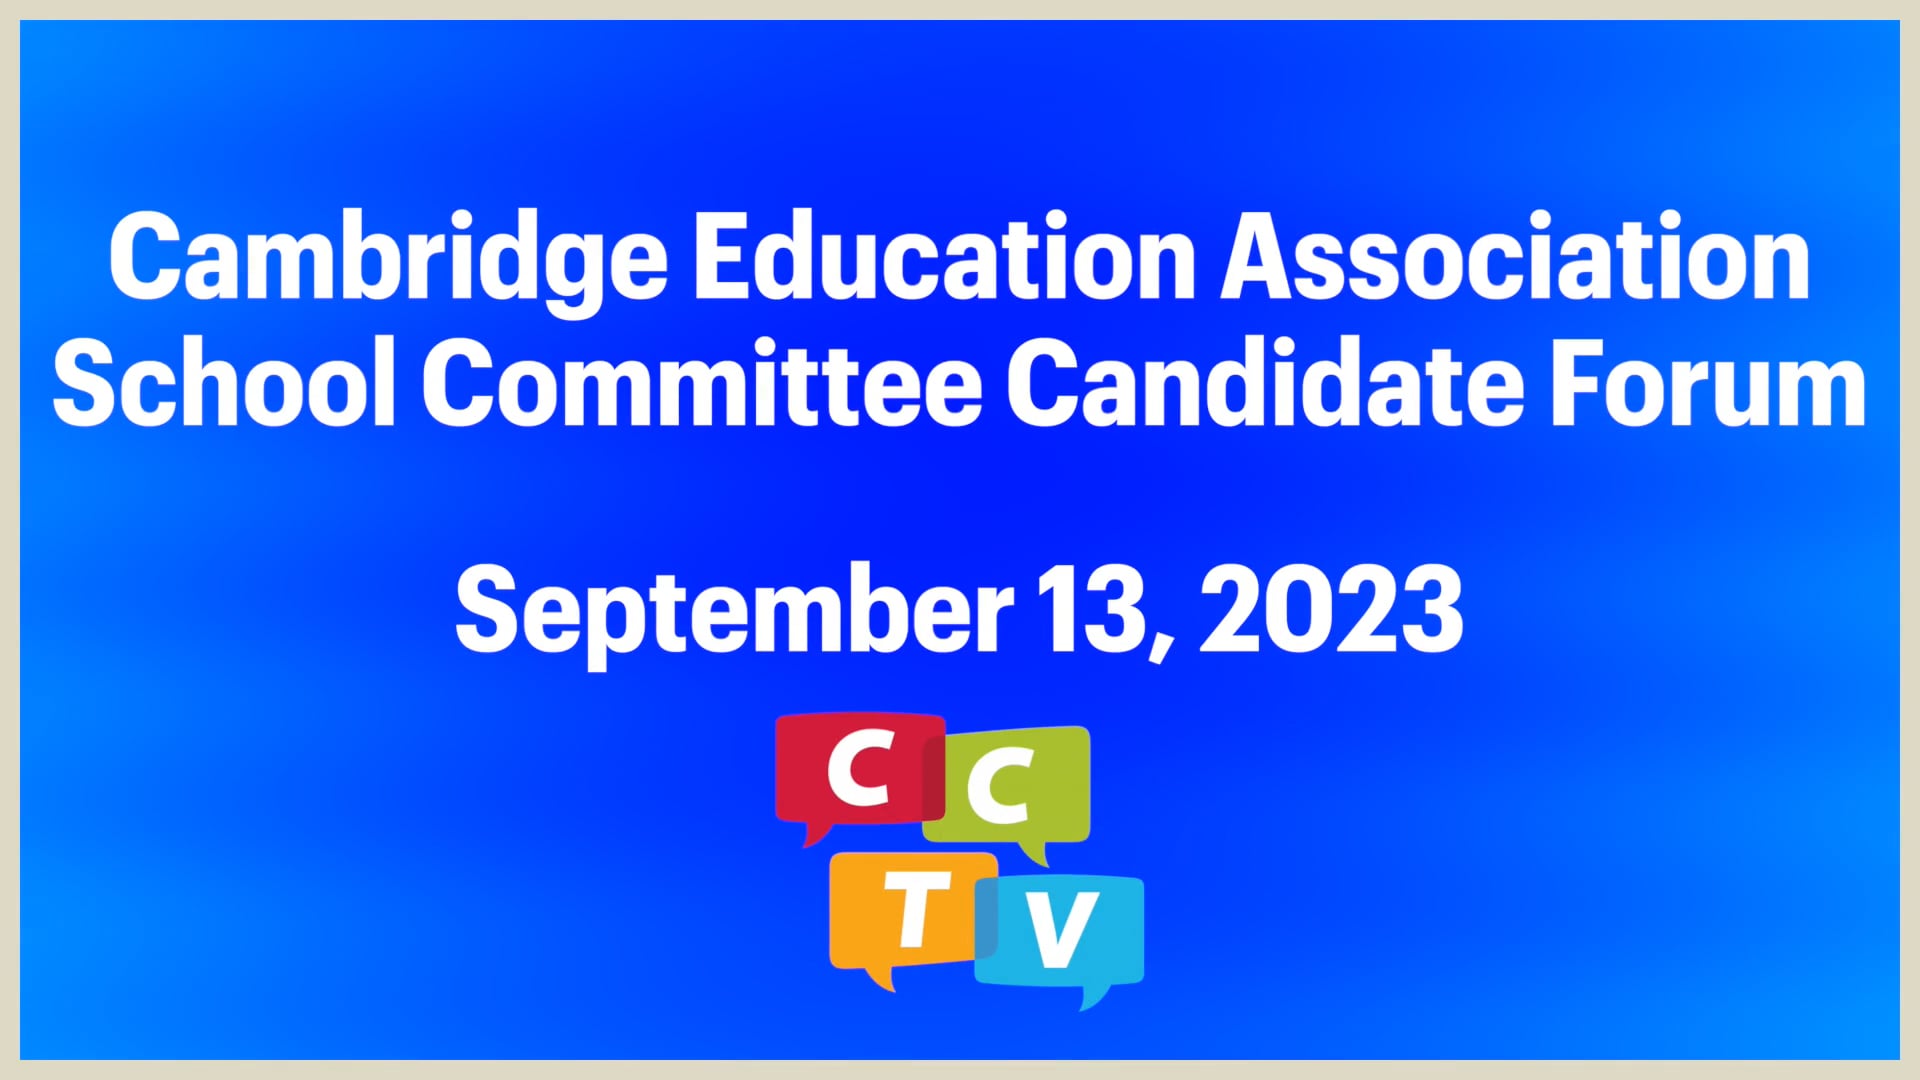 Cambridge Education Association School Committee Candidate Forum